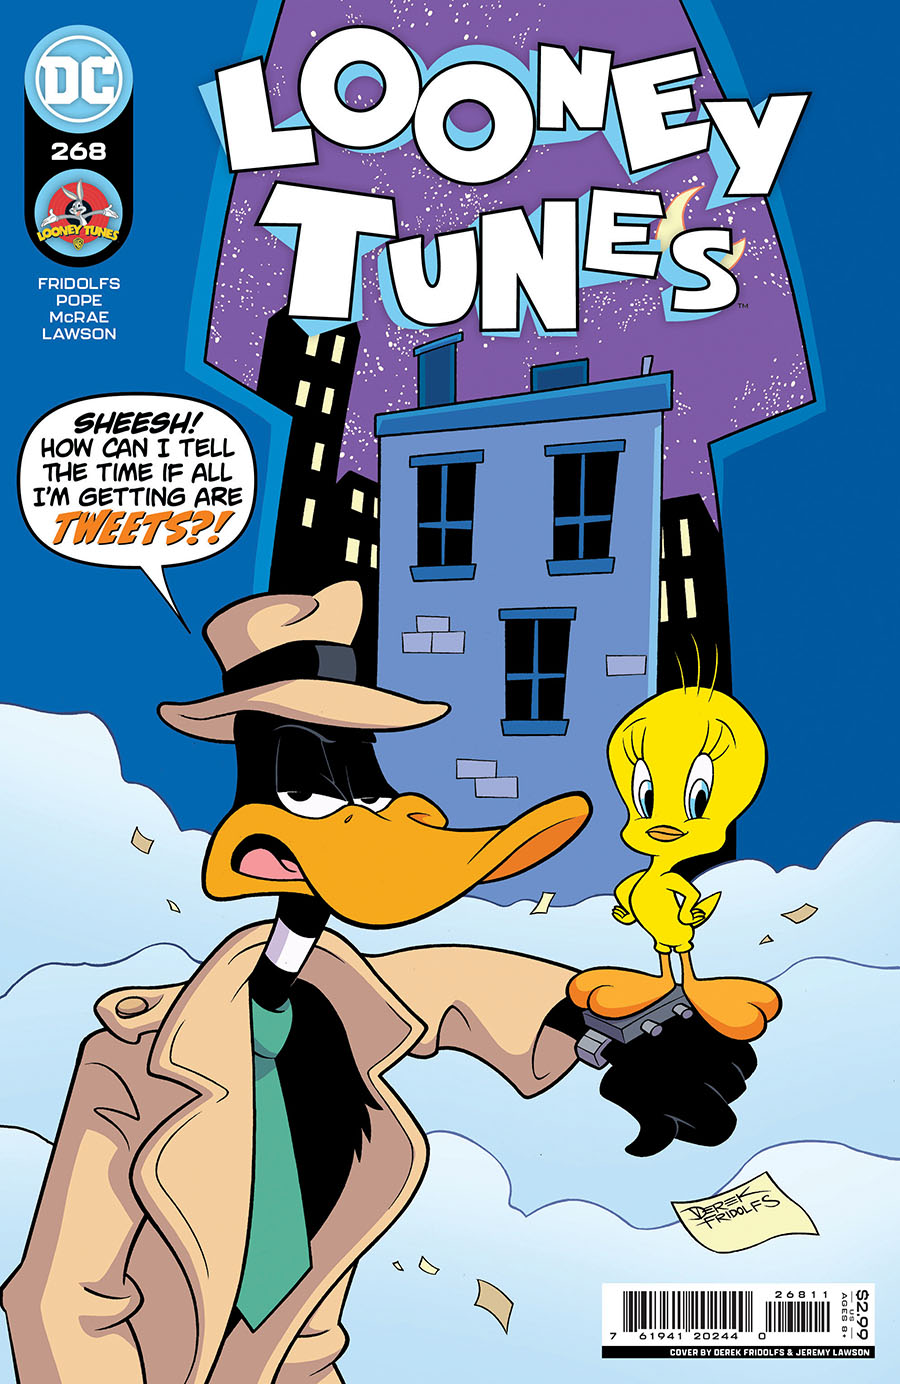 Looney Tunes Vol 3 #268